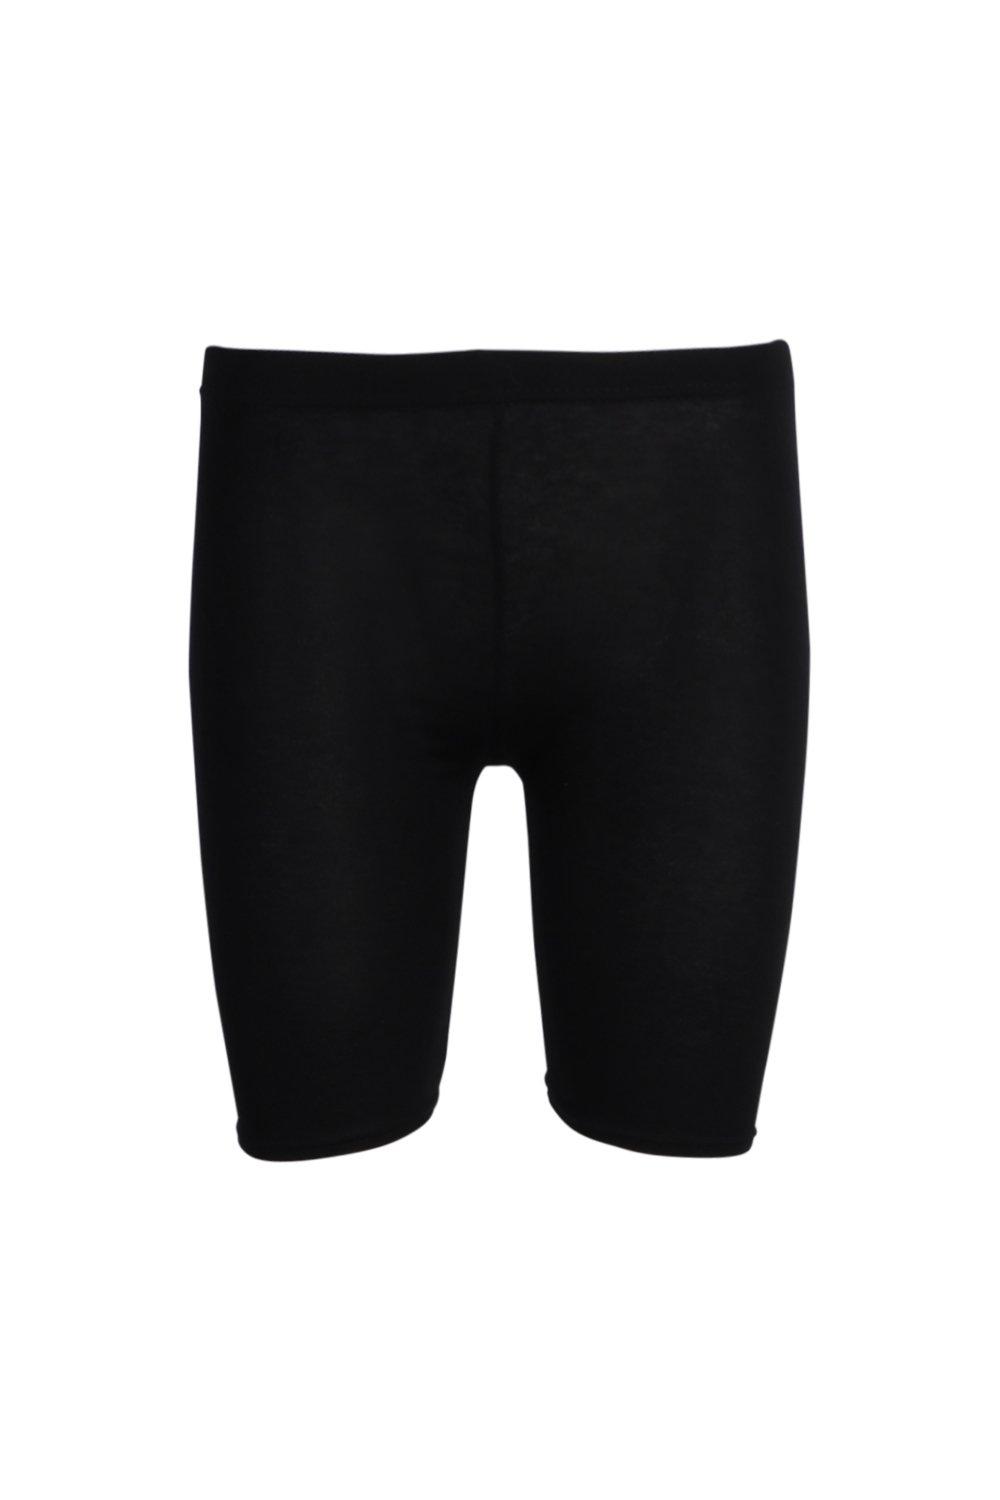 Boohoo Women's Basic Solid Cycling Casual Shorts MC7 Black Size US:10 UK:14 NWT 